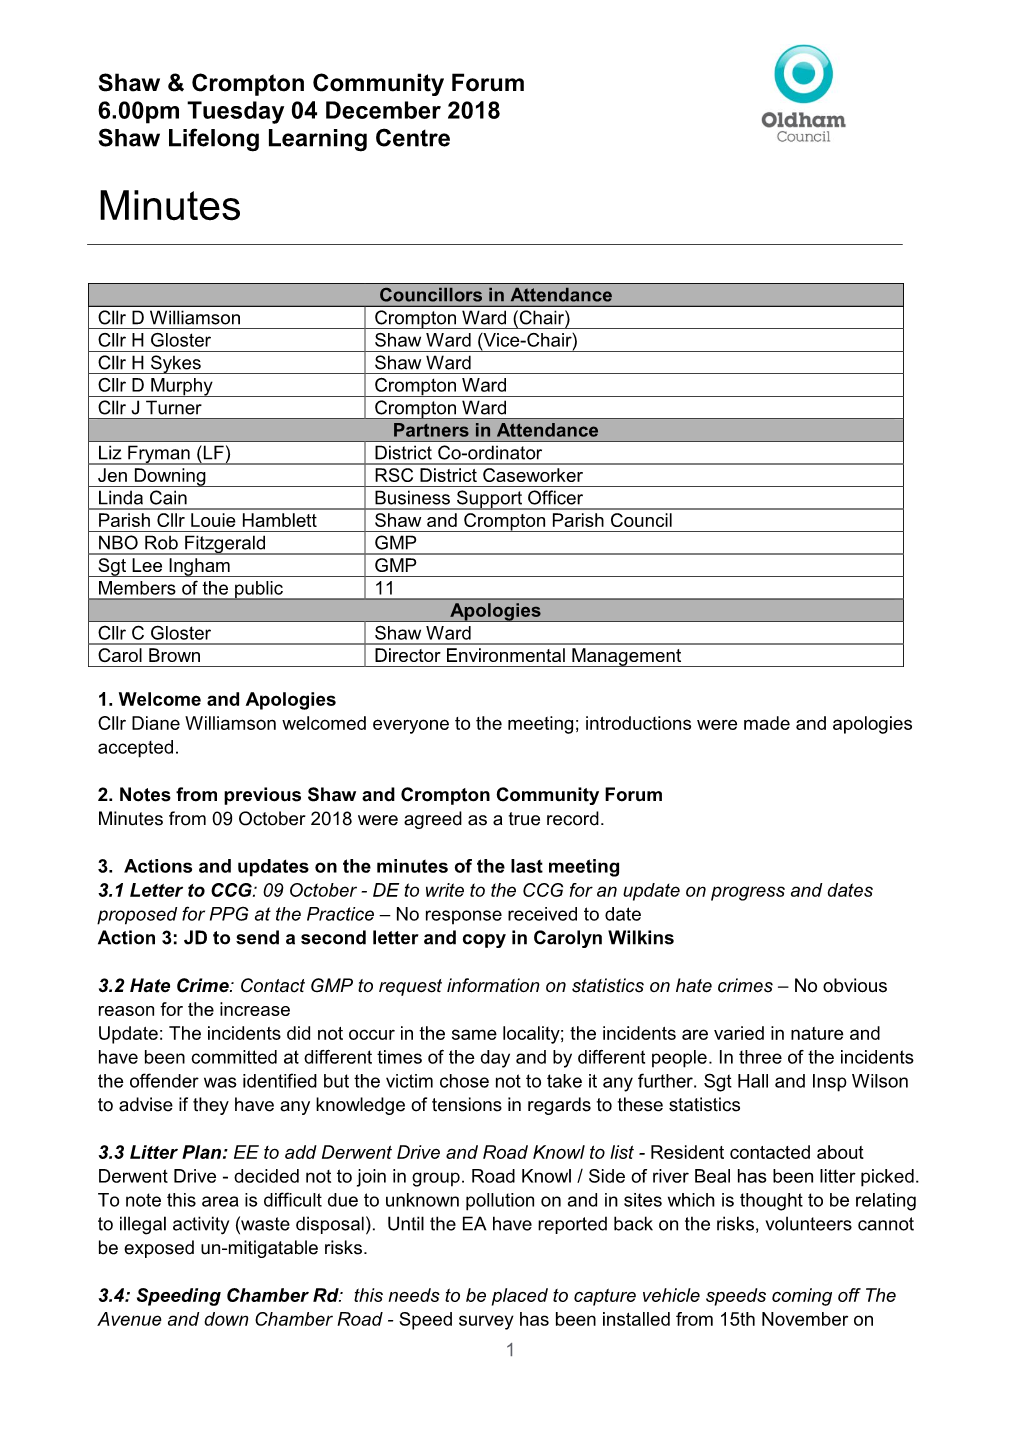 Shaw and Crompton Community Forum Minutes PDF 215 KB